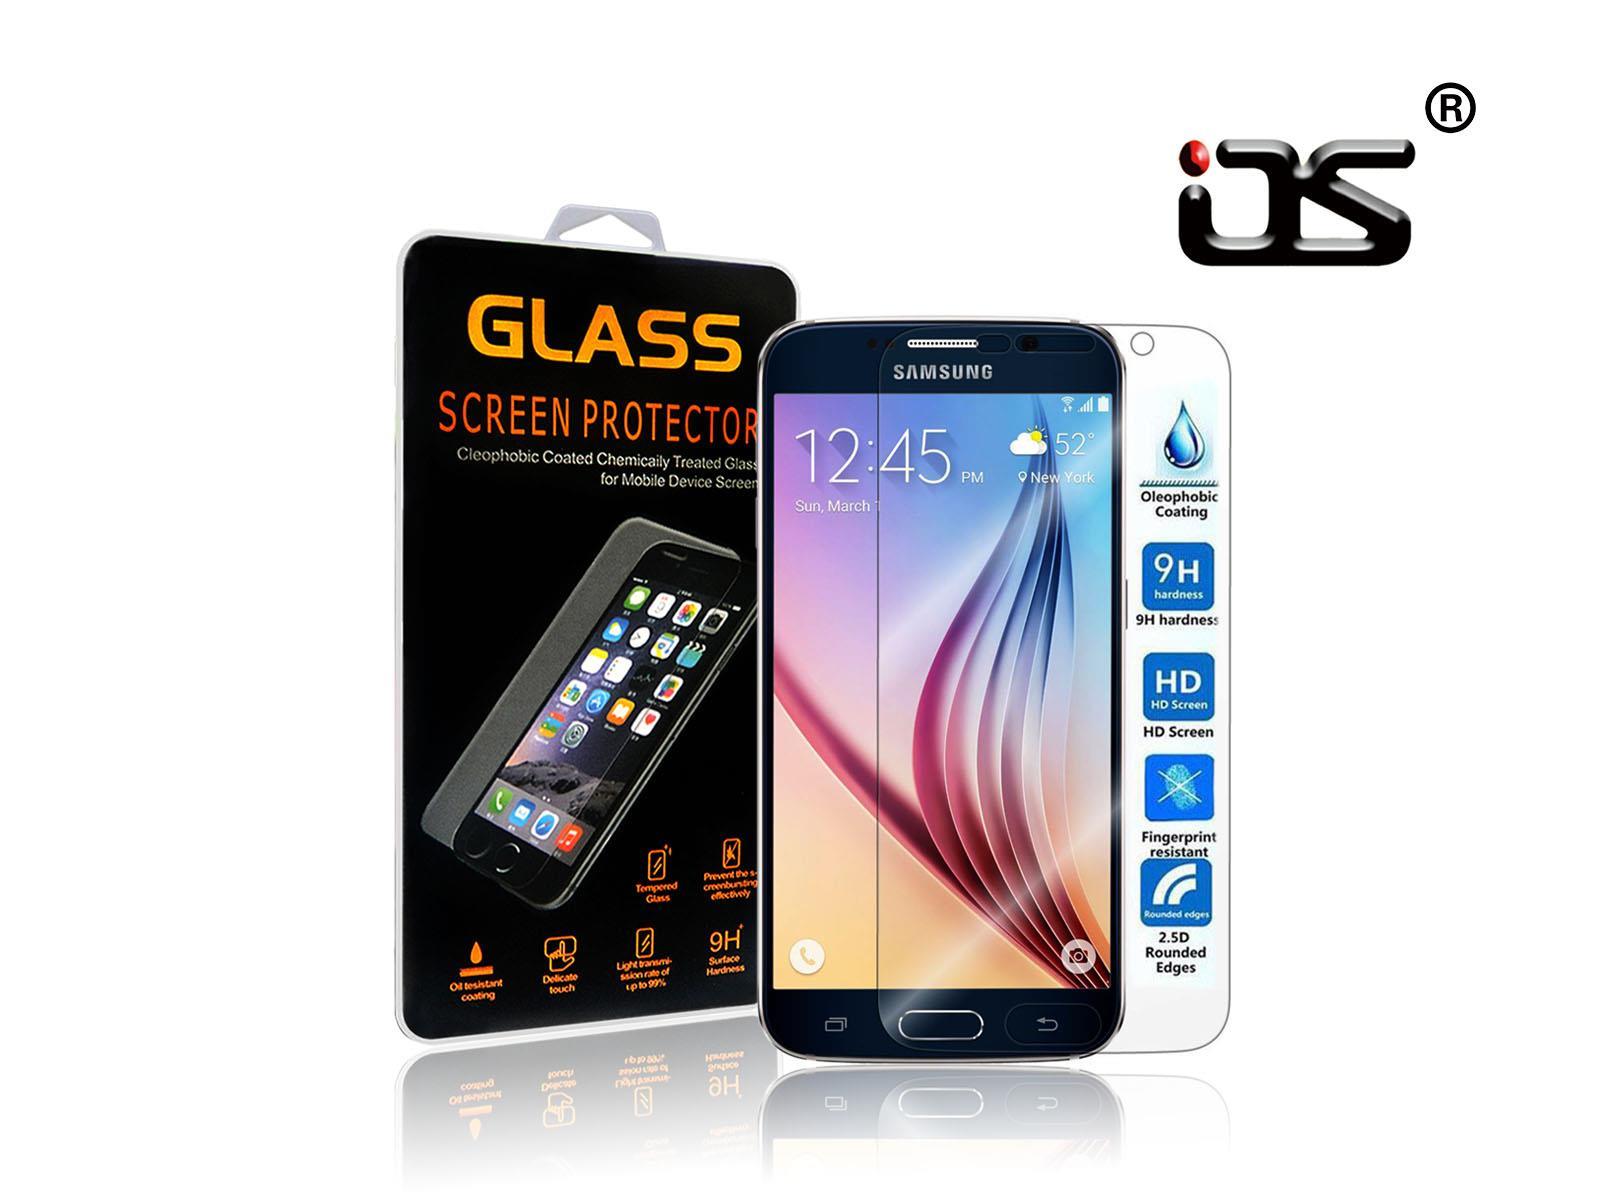 Samsung S6 EDGE+ Tempered Glass